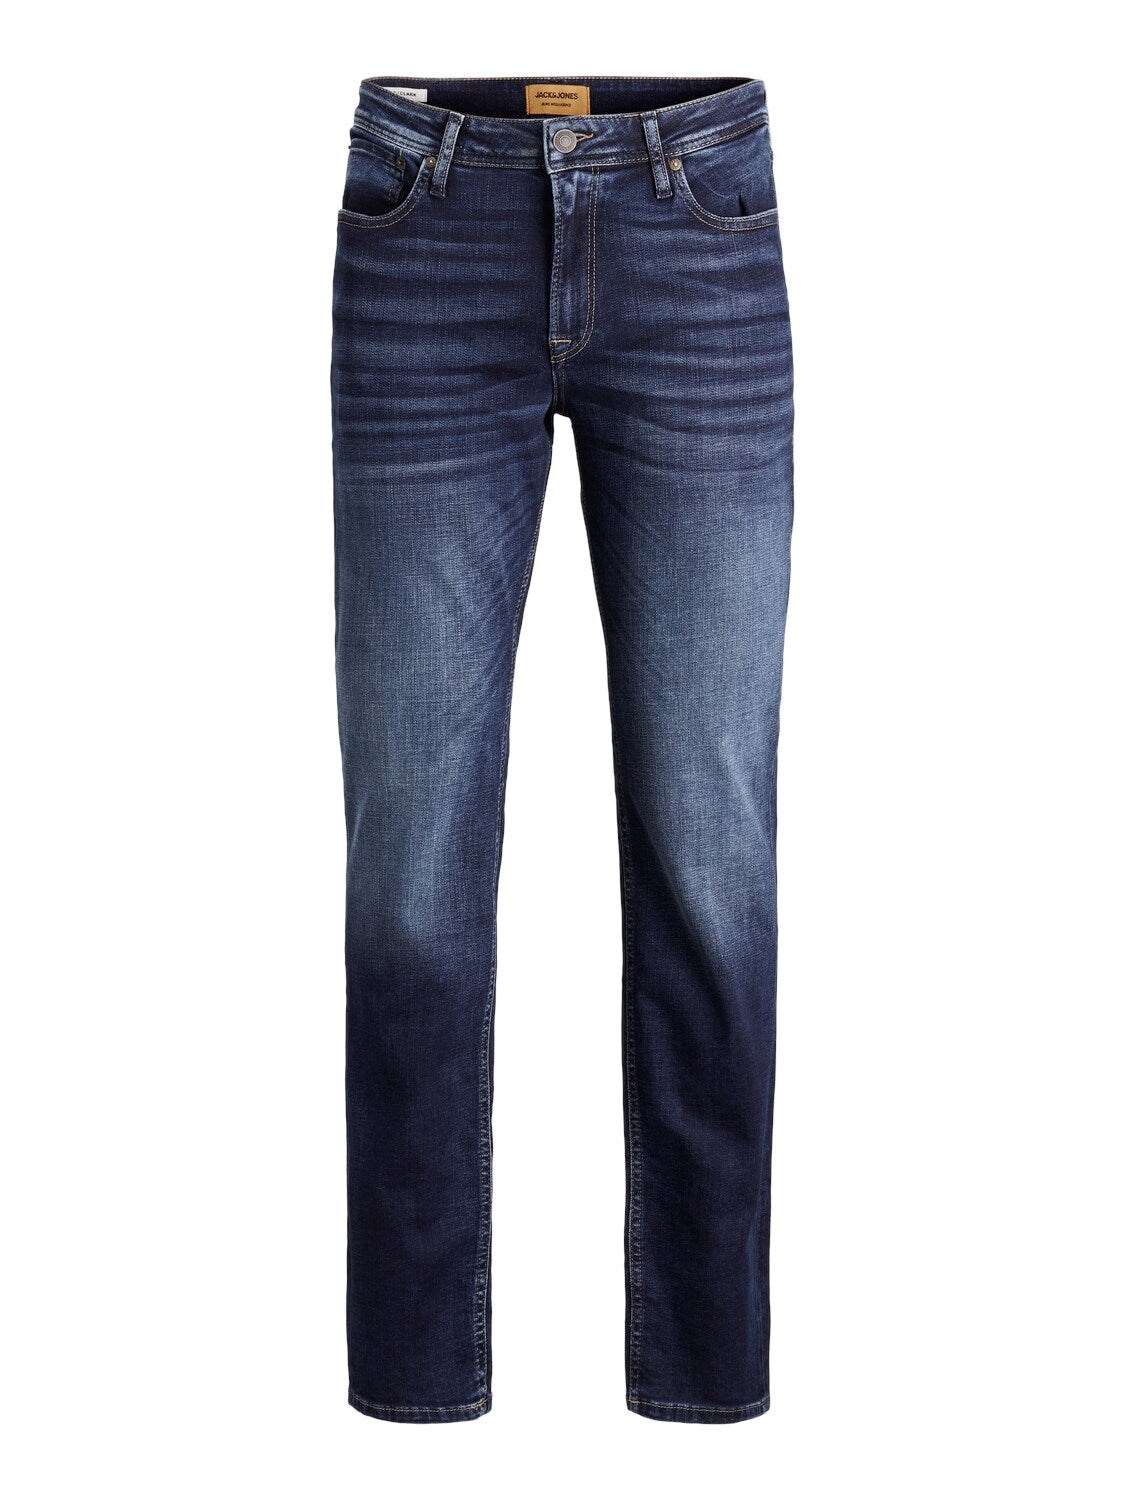 JACK & JONES Regular Fit Jeans 'JJICLARK JJORIGINAL JOS 278 NOOS' Blue Denim, Unifarben, Blau - Gr. 31 x 34